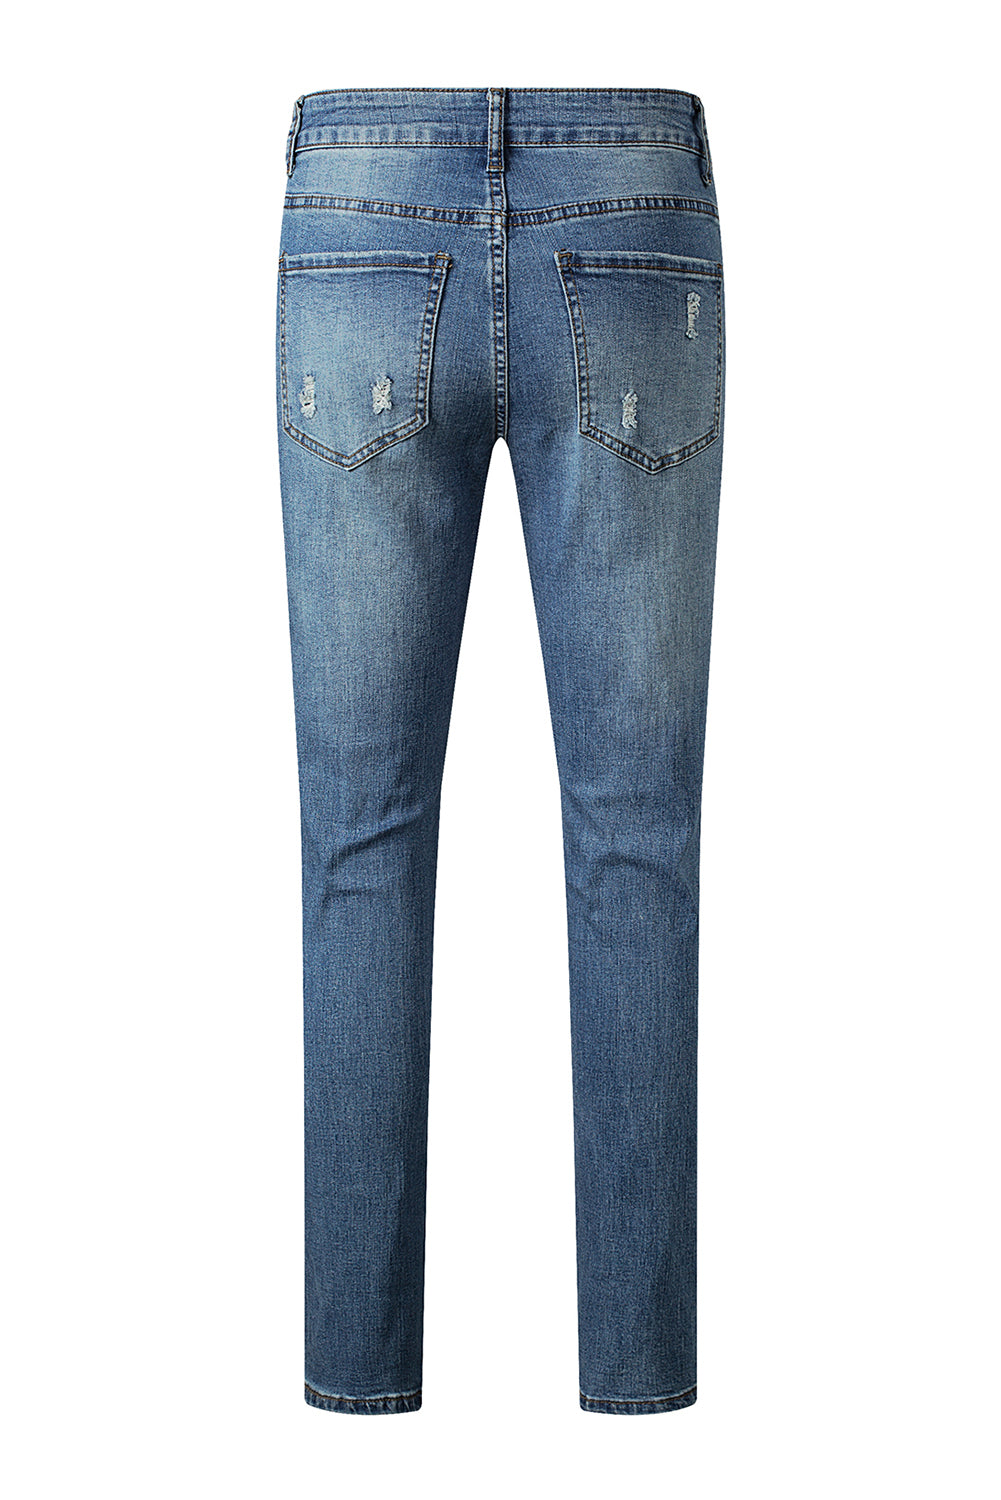 Sky Blue Valentines Day Heart Patchwork Jeans Graphic Pants JT's Designer Fashion